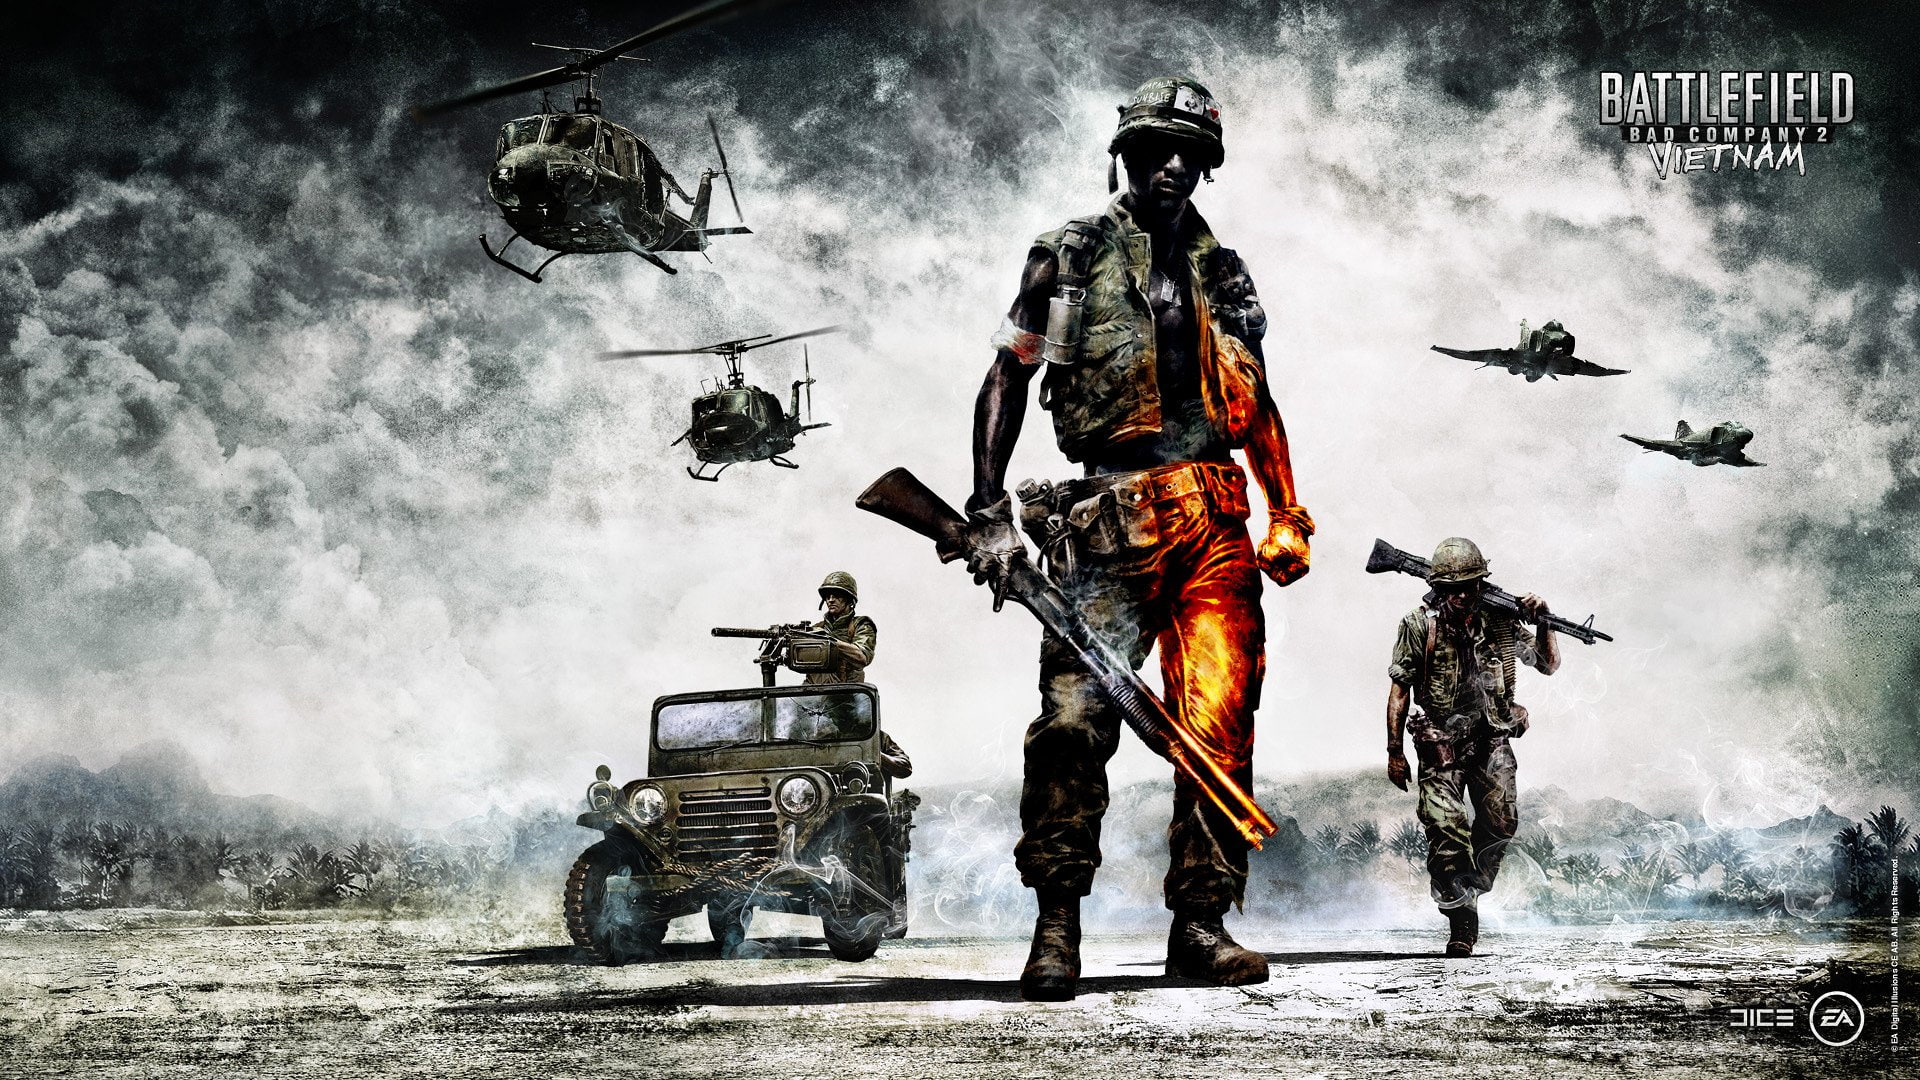 Battlefield Bad Company 2 Vietnam, battlefield game